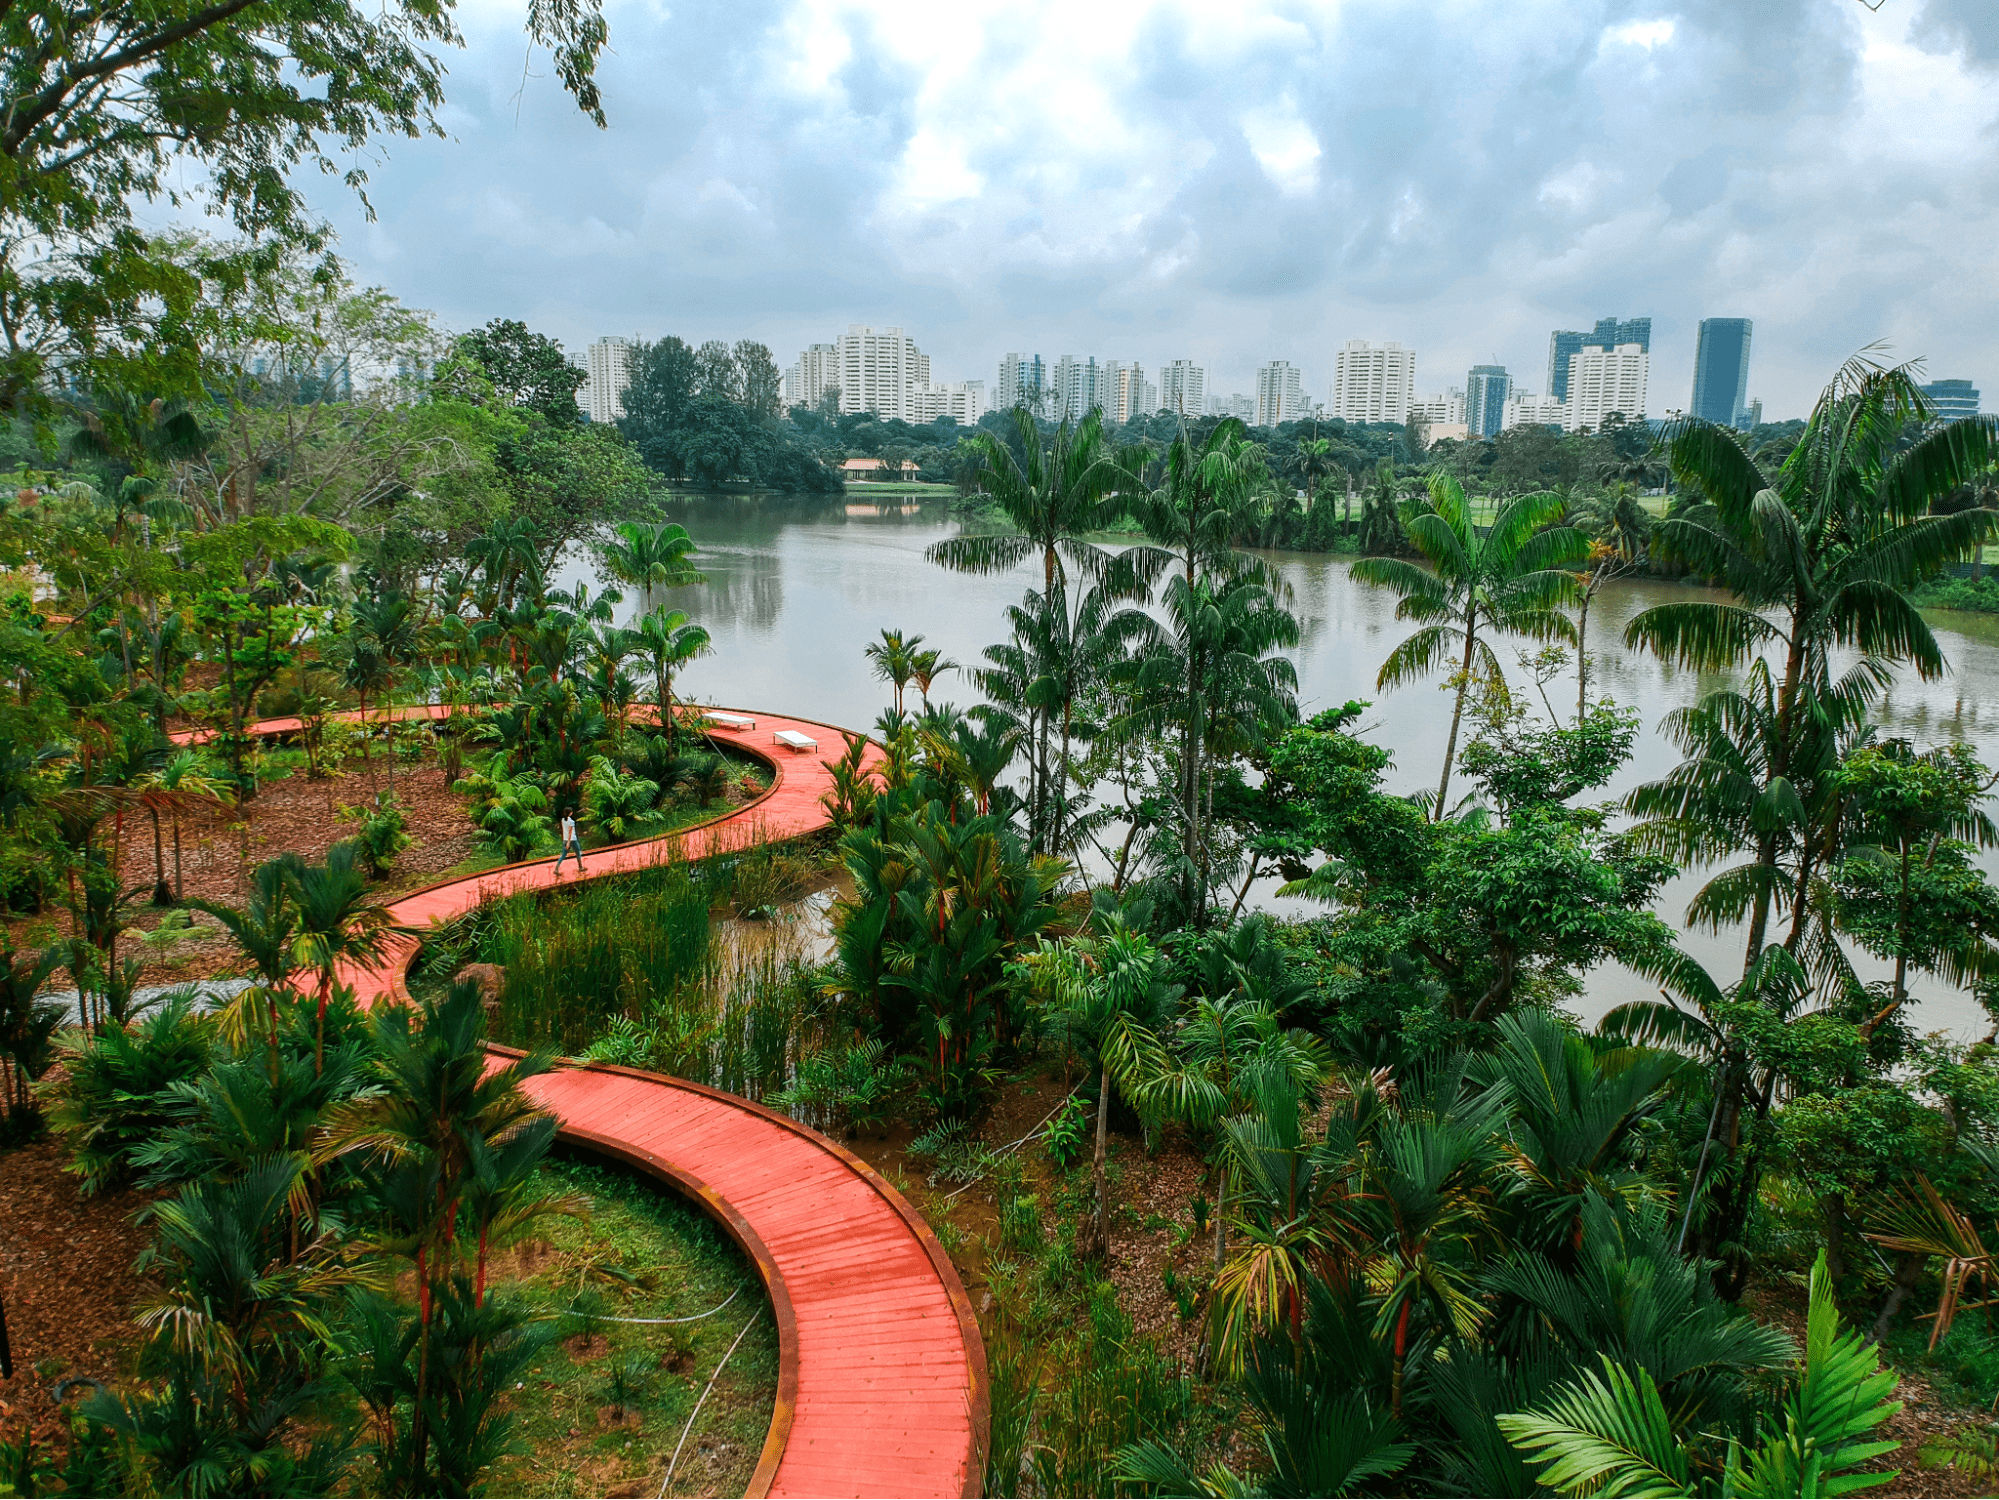 Senior-friendly Jurong Lake Gardens